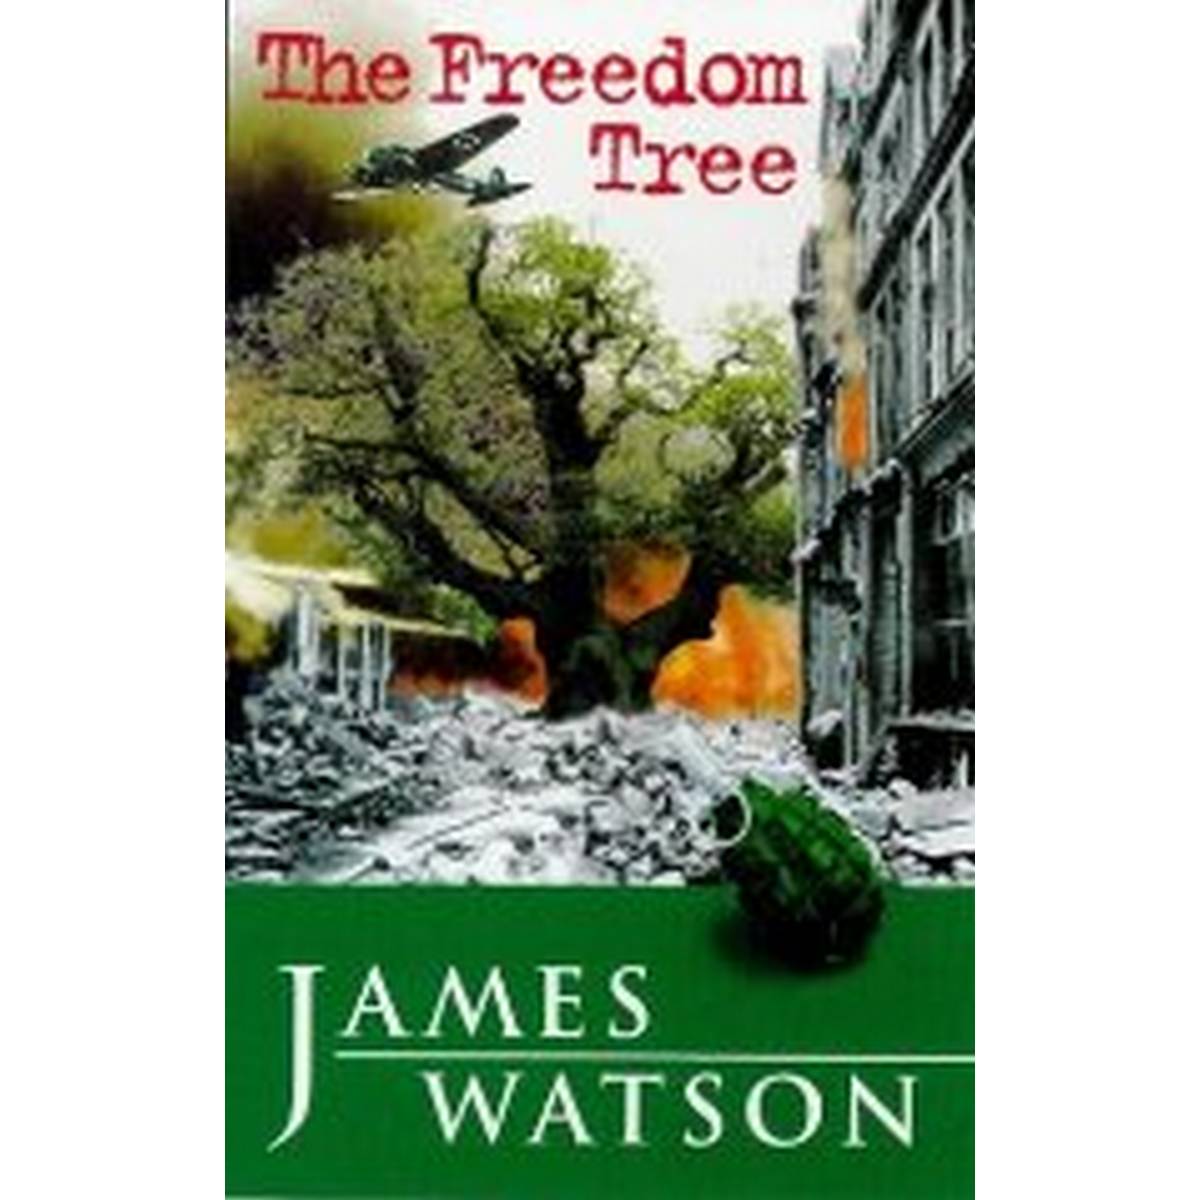 The Freedom Tree